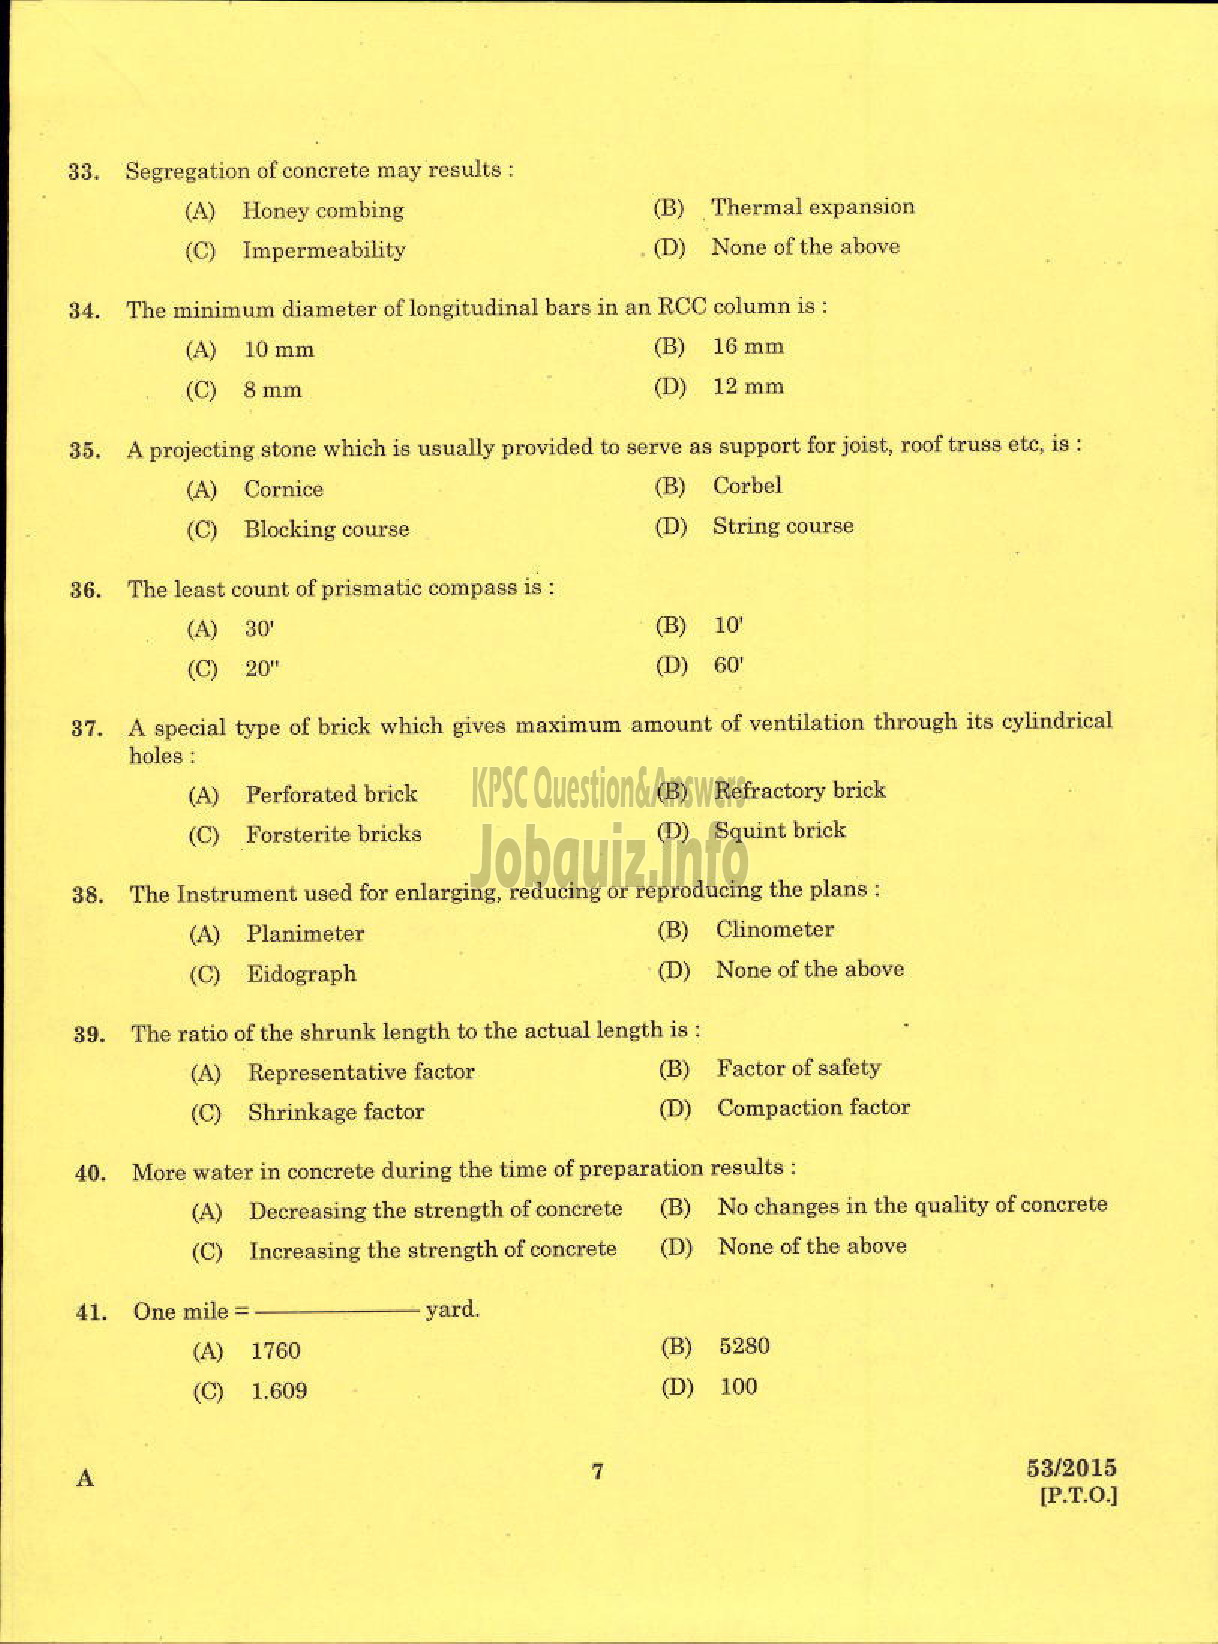 Kerala PSC Question Paper - TRADESMAN SURVEY TECHNICAL EDUCATION TVM-5